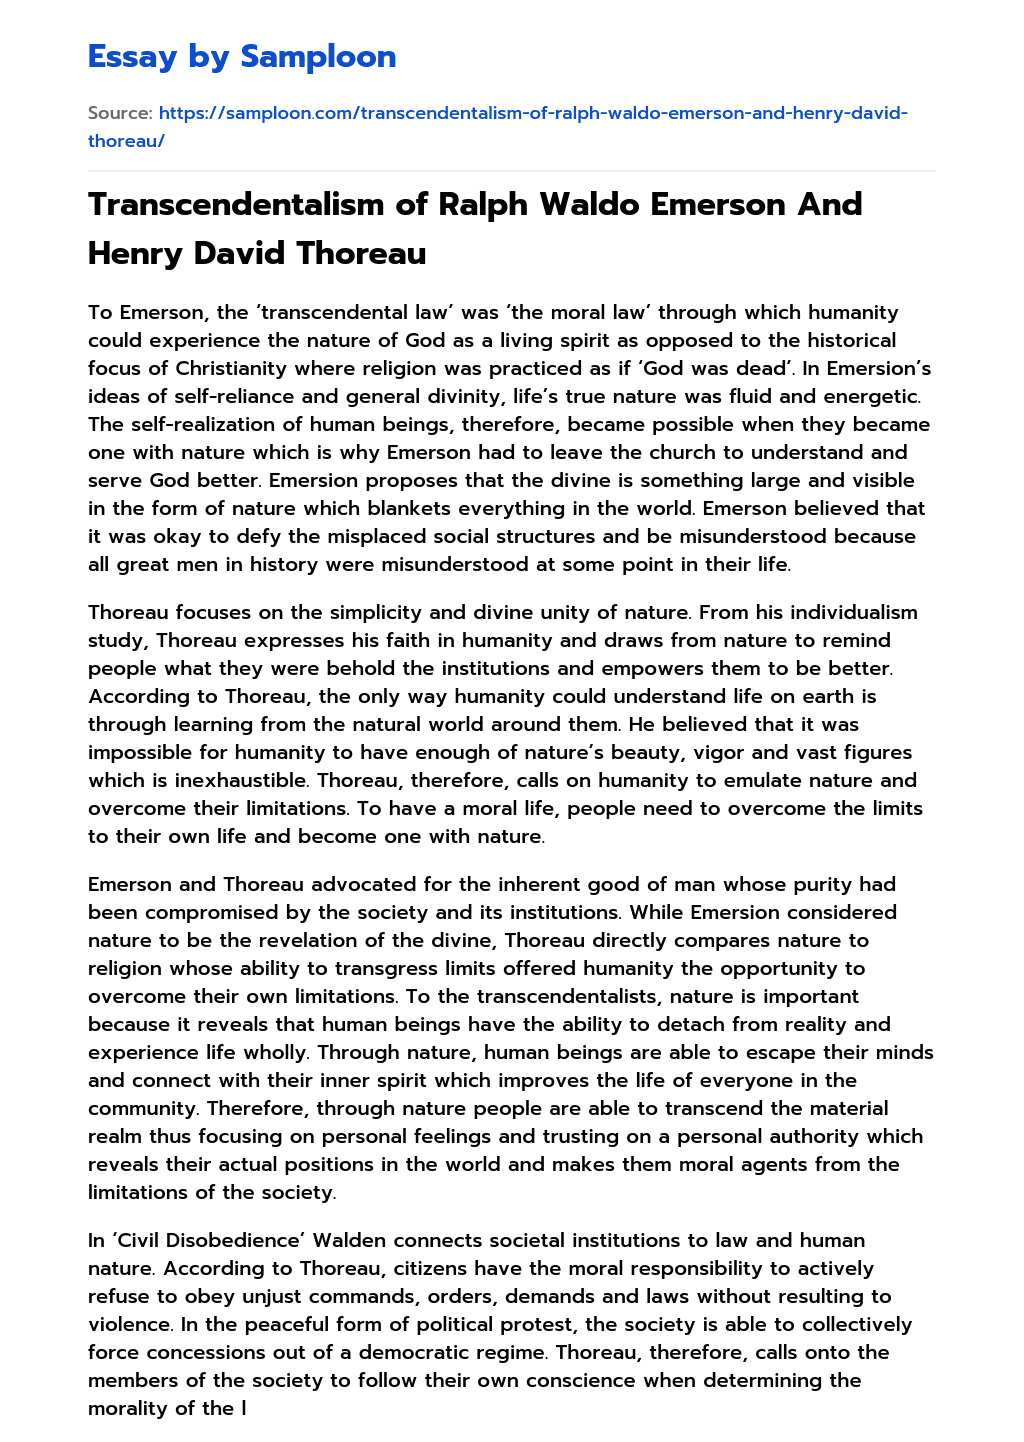 Transcendentalism of Ralph Waldo Emerson And Henry David Thoreau essay